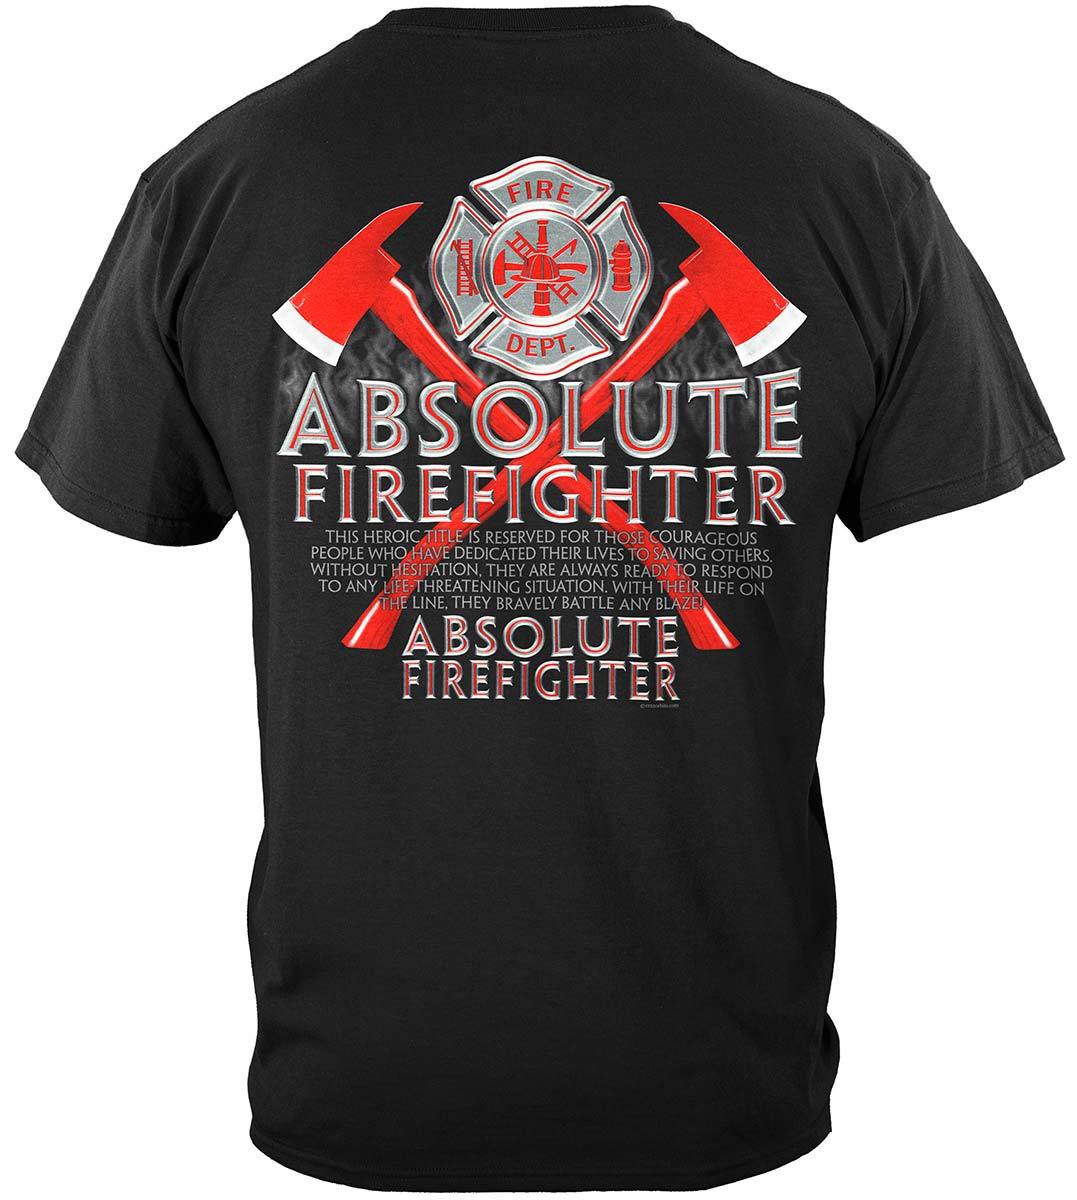 Absolute Firefighter Premium Hooded Sweat Shirt